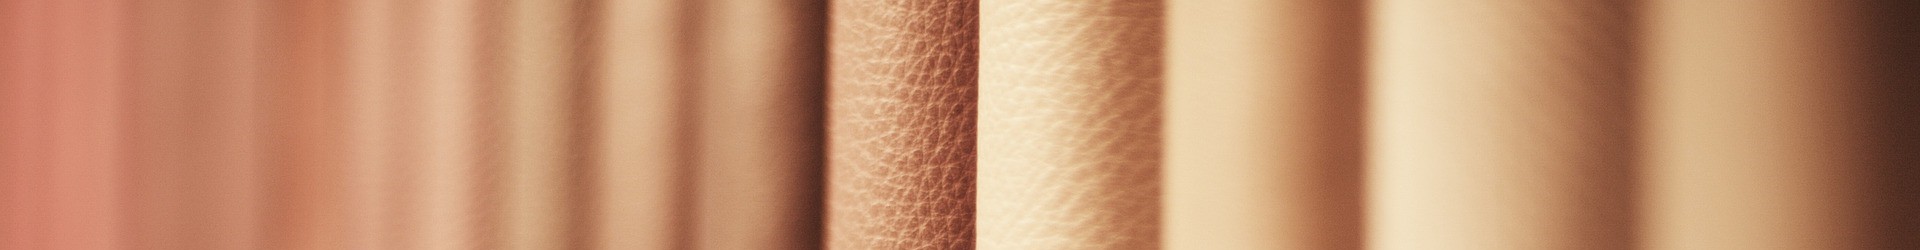 Custom made Diamond Pattern Fabric PVC Durable Waterproof Fabric Super Hot Sale Leather